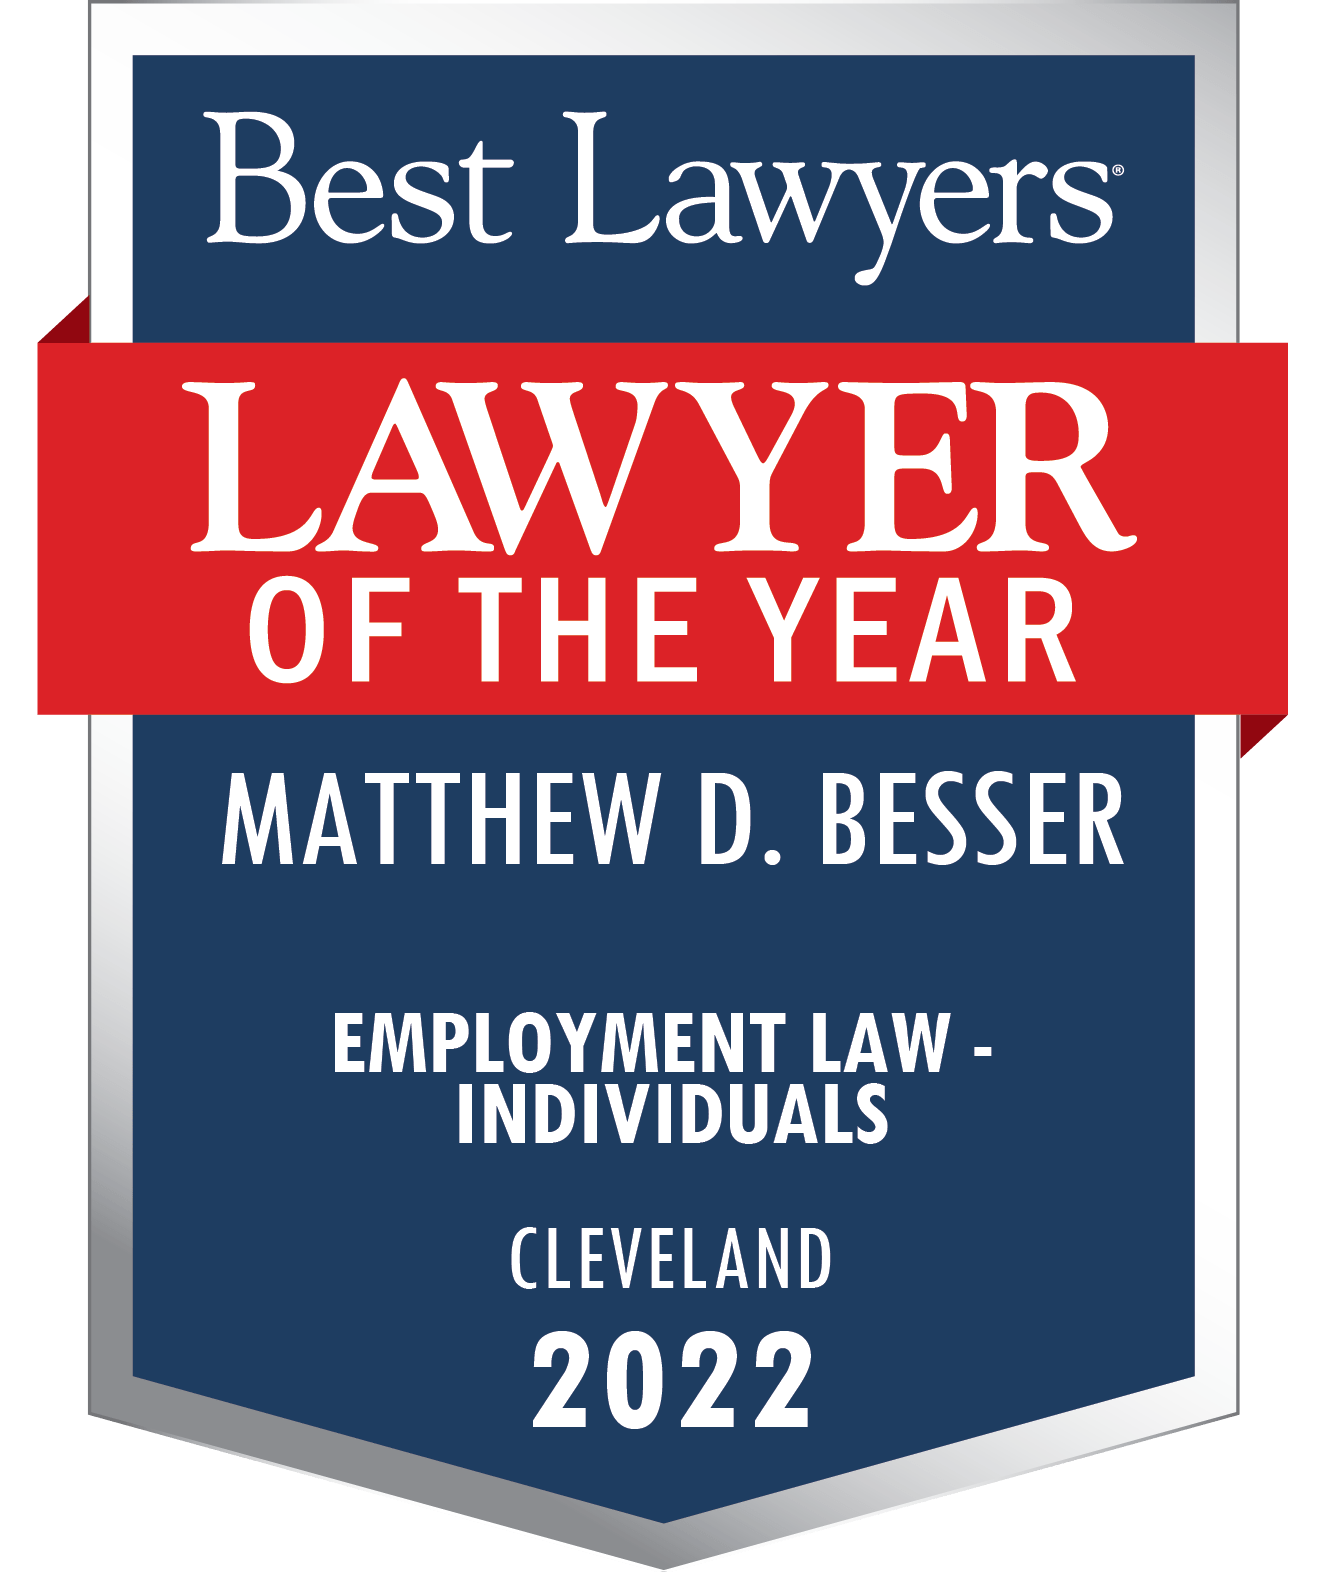 Best Lawyers Cathleen M. Bolek Lawyer of the Year 2021